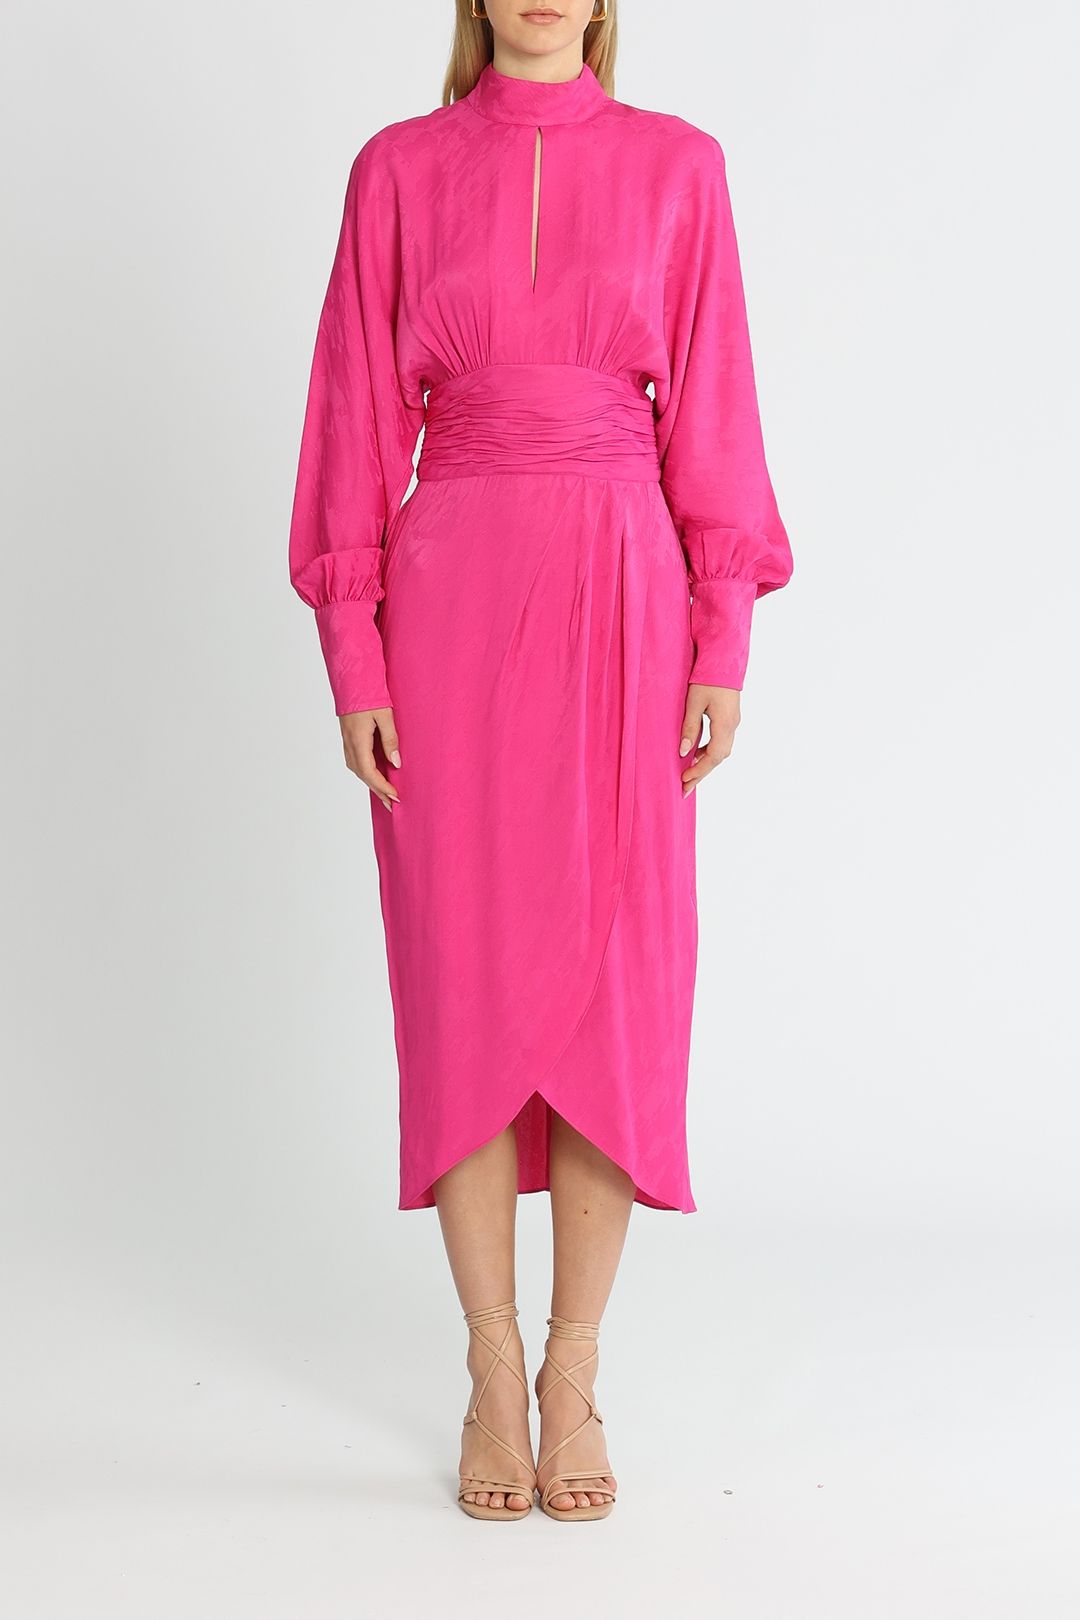 Rebecca Vallance Theresa Midi Dress Pink